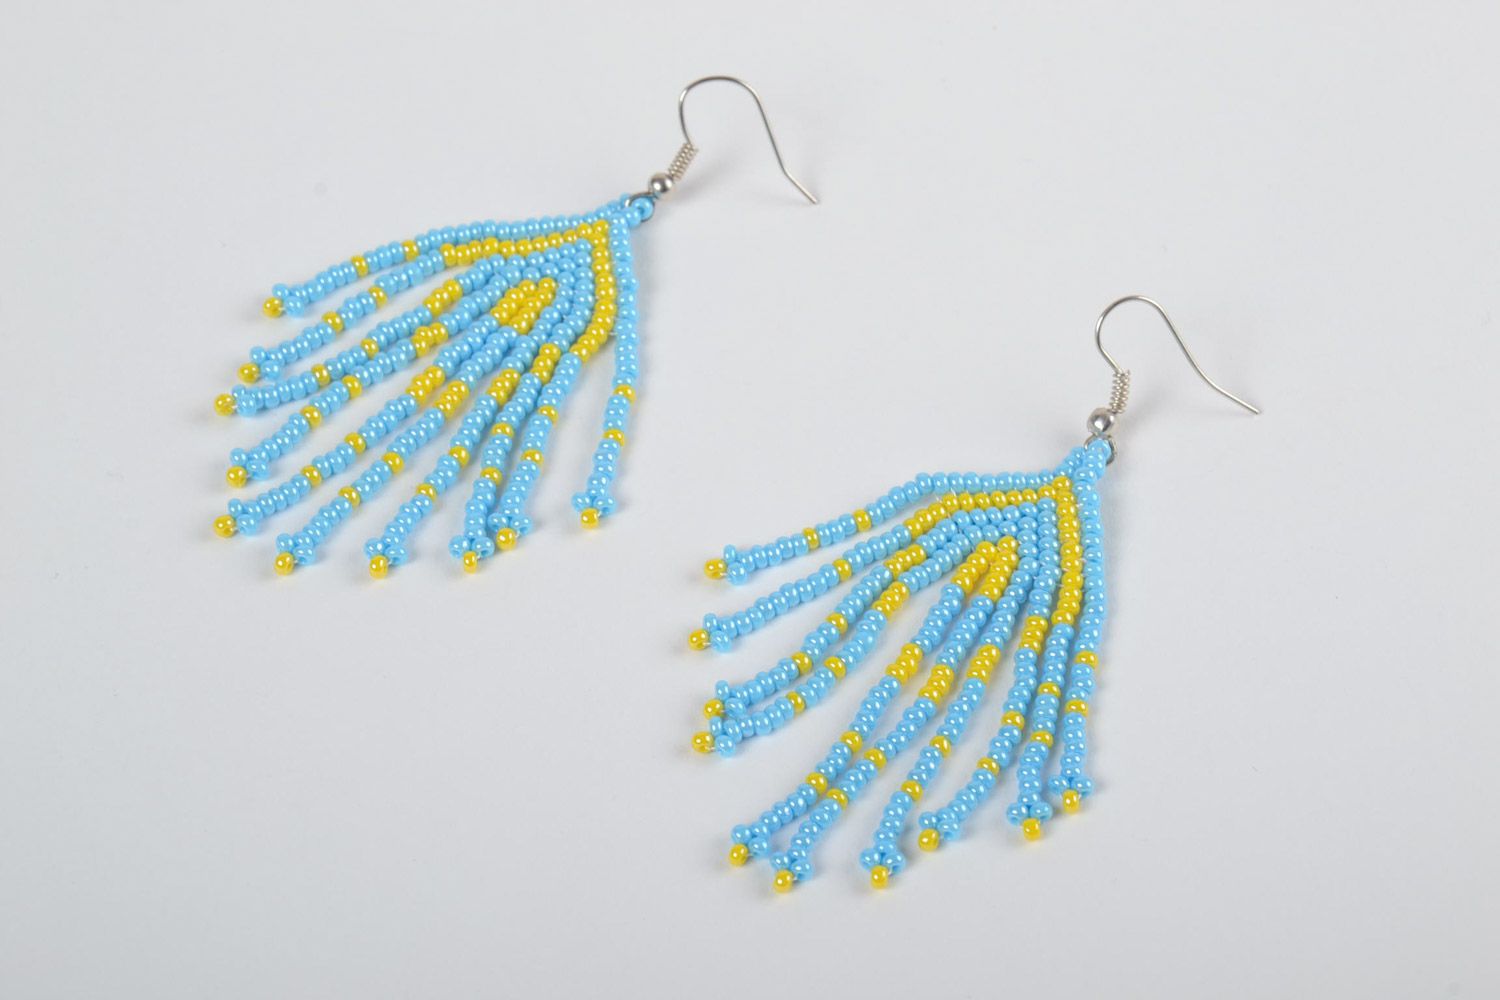 Bright festive handmade beaded earrings created using mosaic weaving photo 2